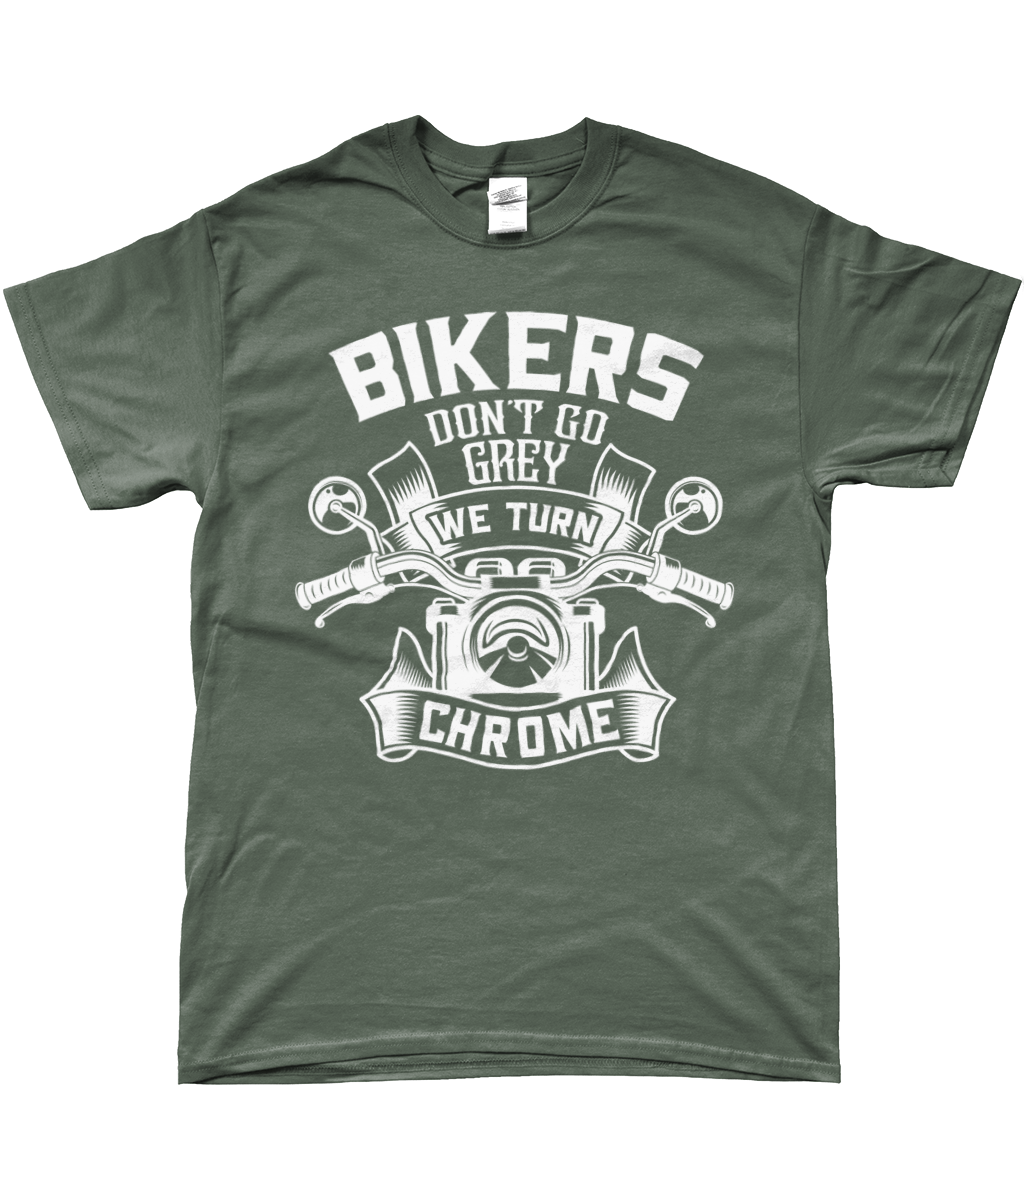 Bikers Don't Go Grey  Motorcycle T-Shirt v2